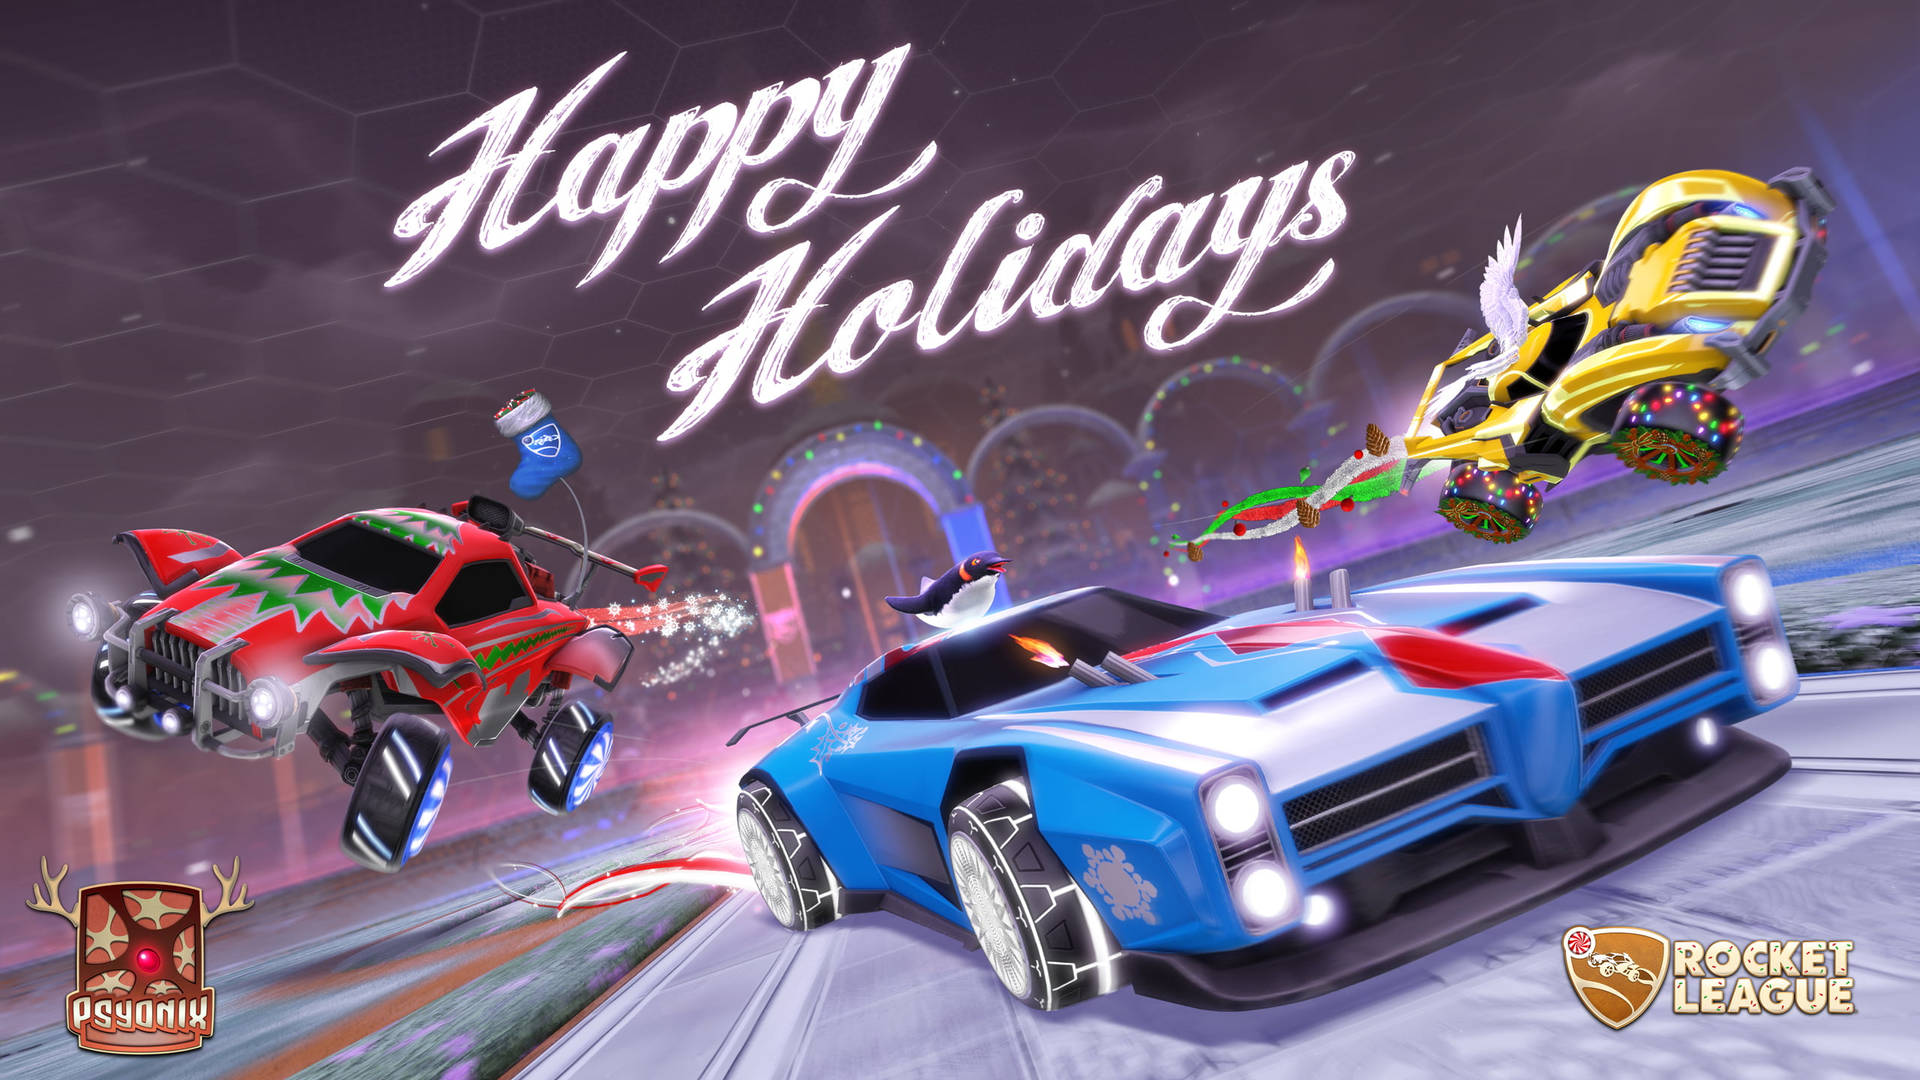 Rocket League Digital Holiday Poster